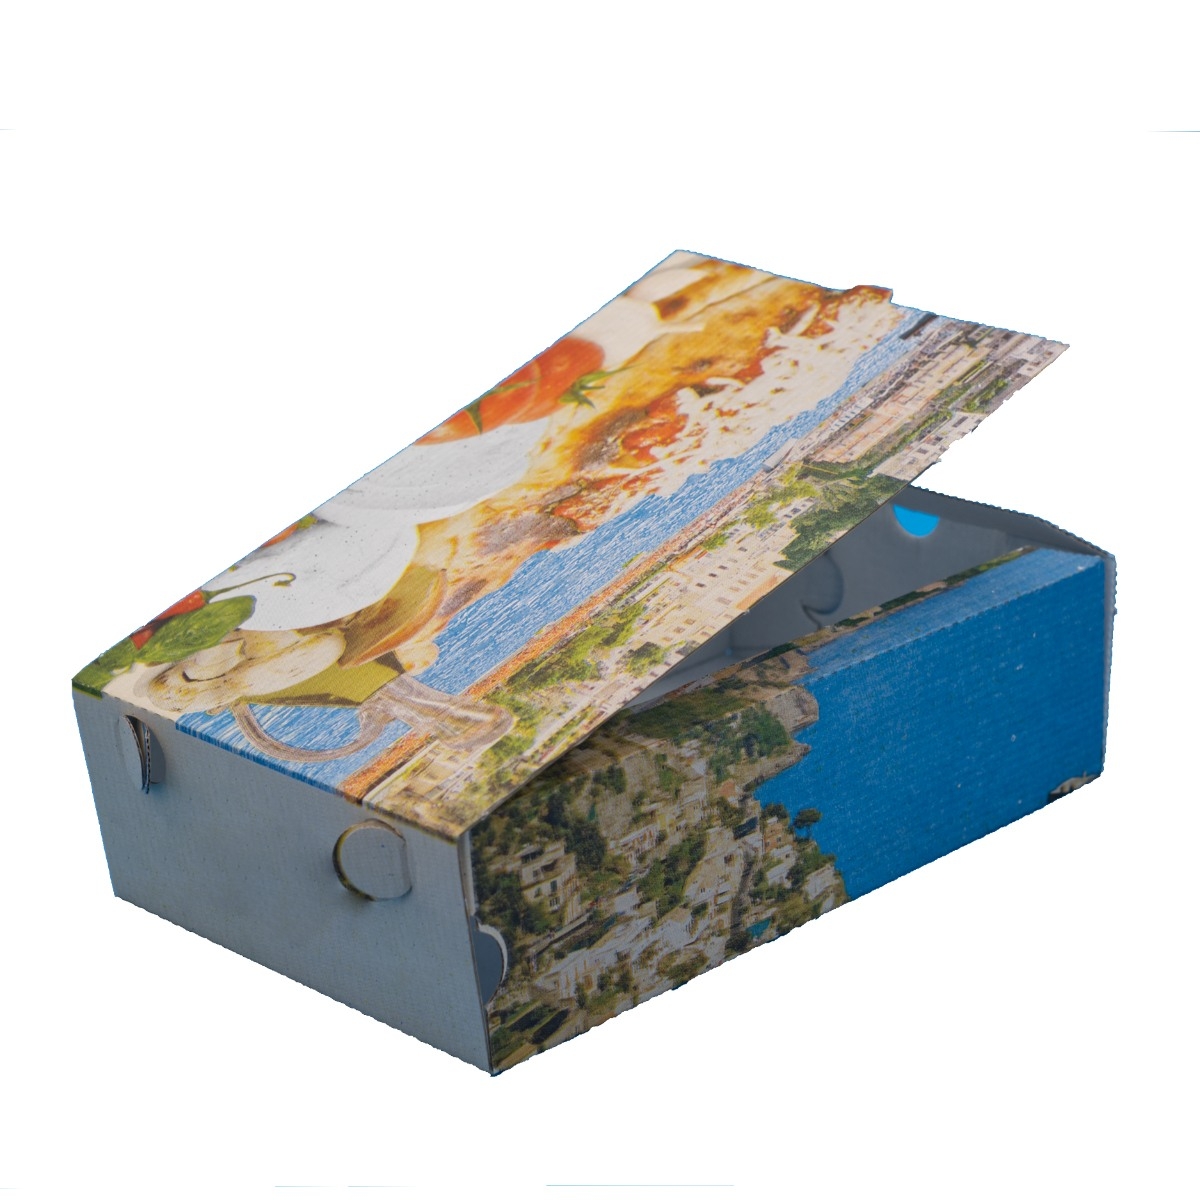 Calzone Box 27 x 17 x 7 cm, Lange Form, Lato Lungo